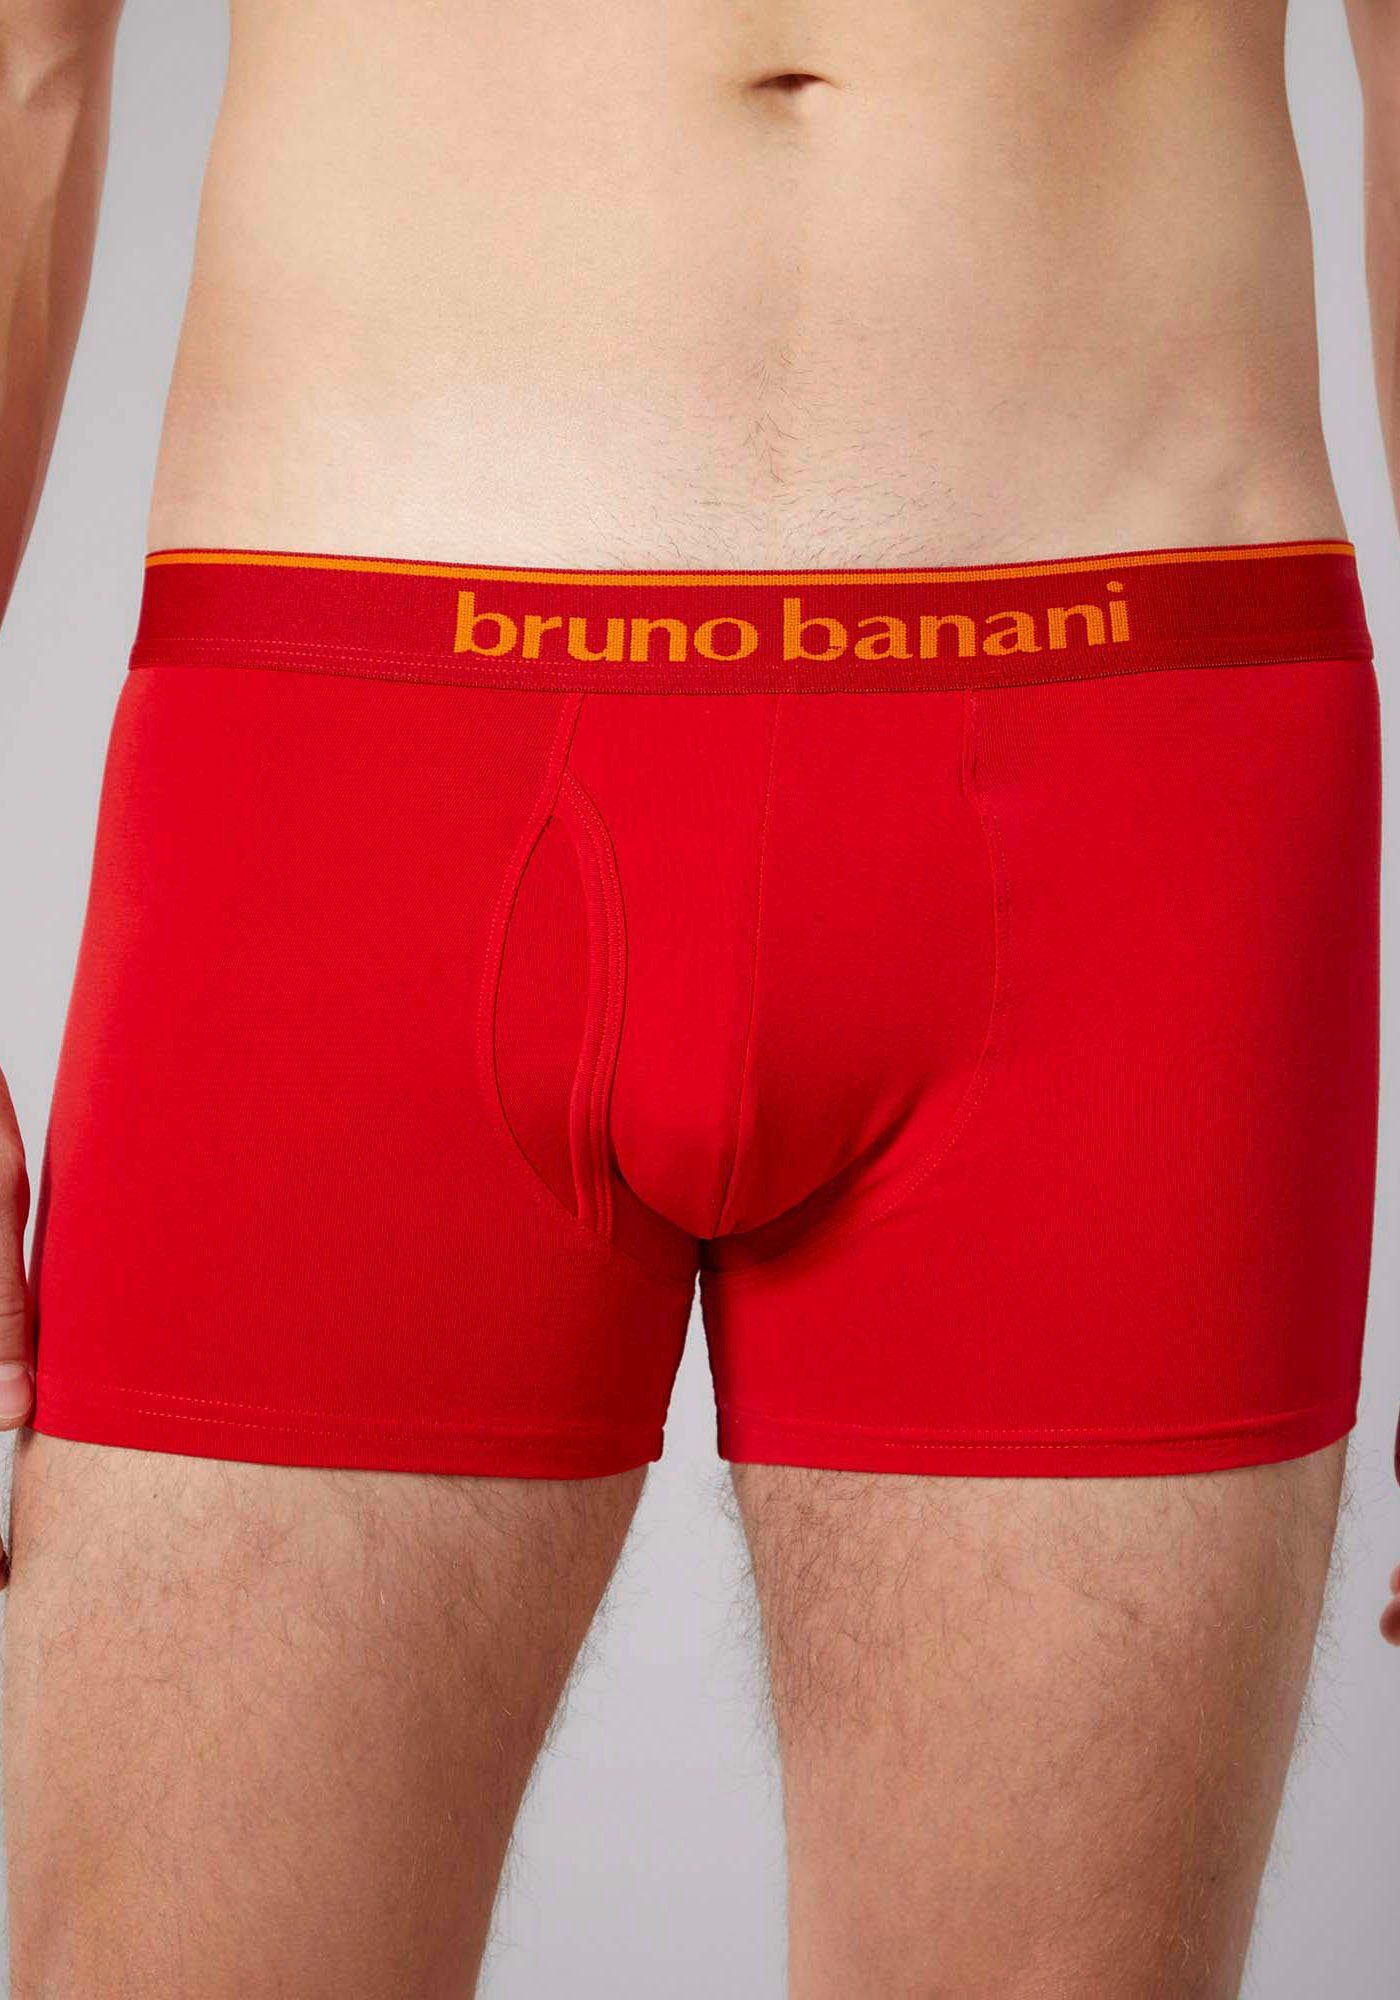 Bruno Banani Boxershorts Short 2-St) Kontrastfarbene Details 2Pack Access rot-schwarz (Packung, Quick